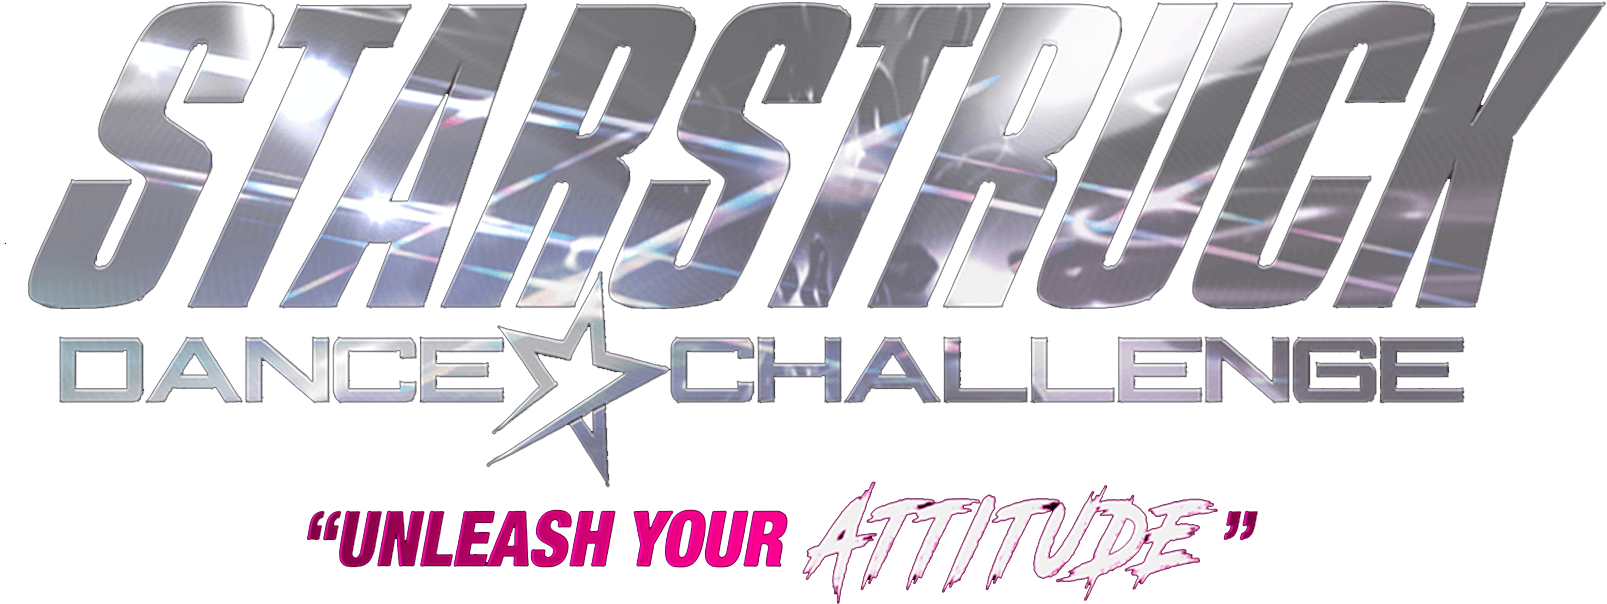 Starstruck - Dance Challenge logo